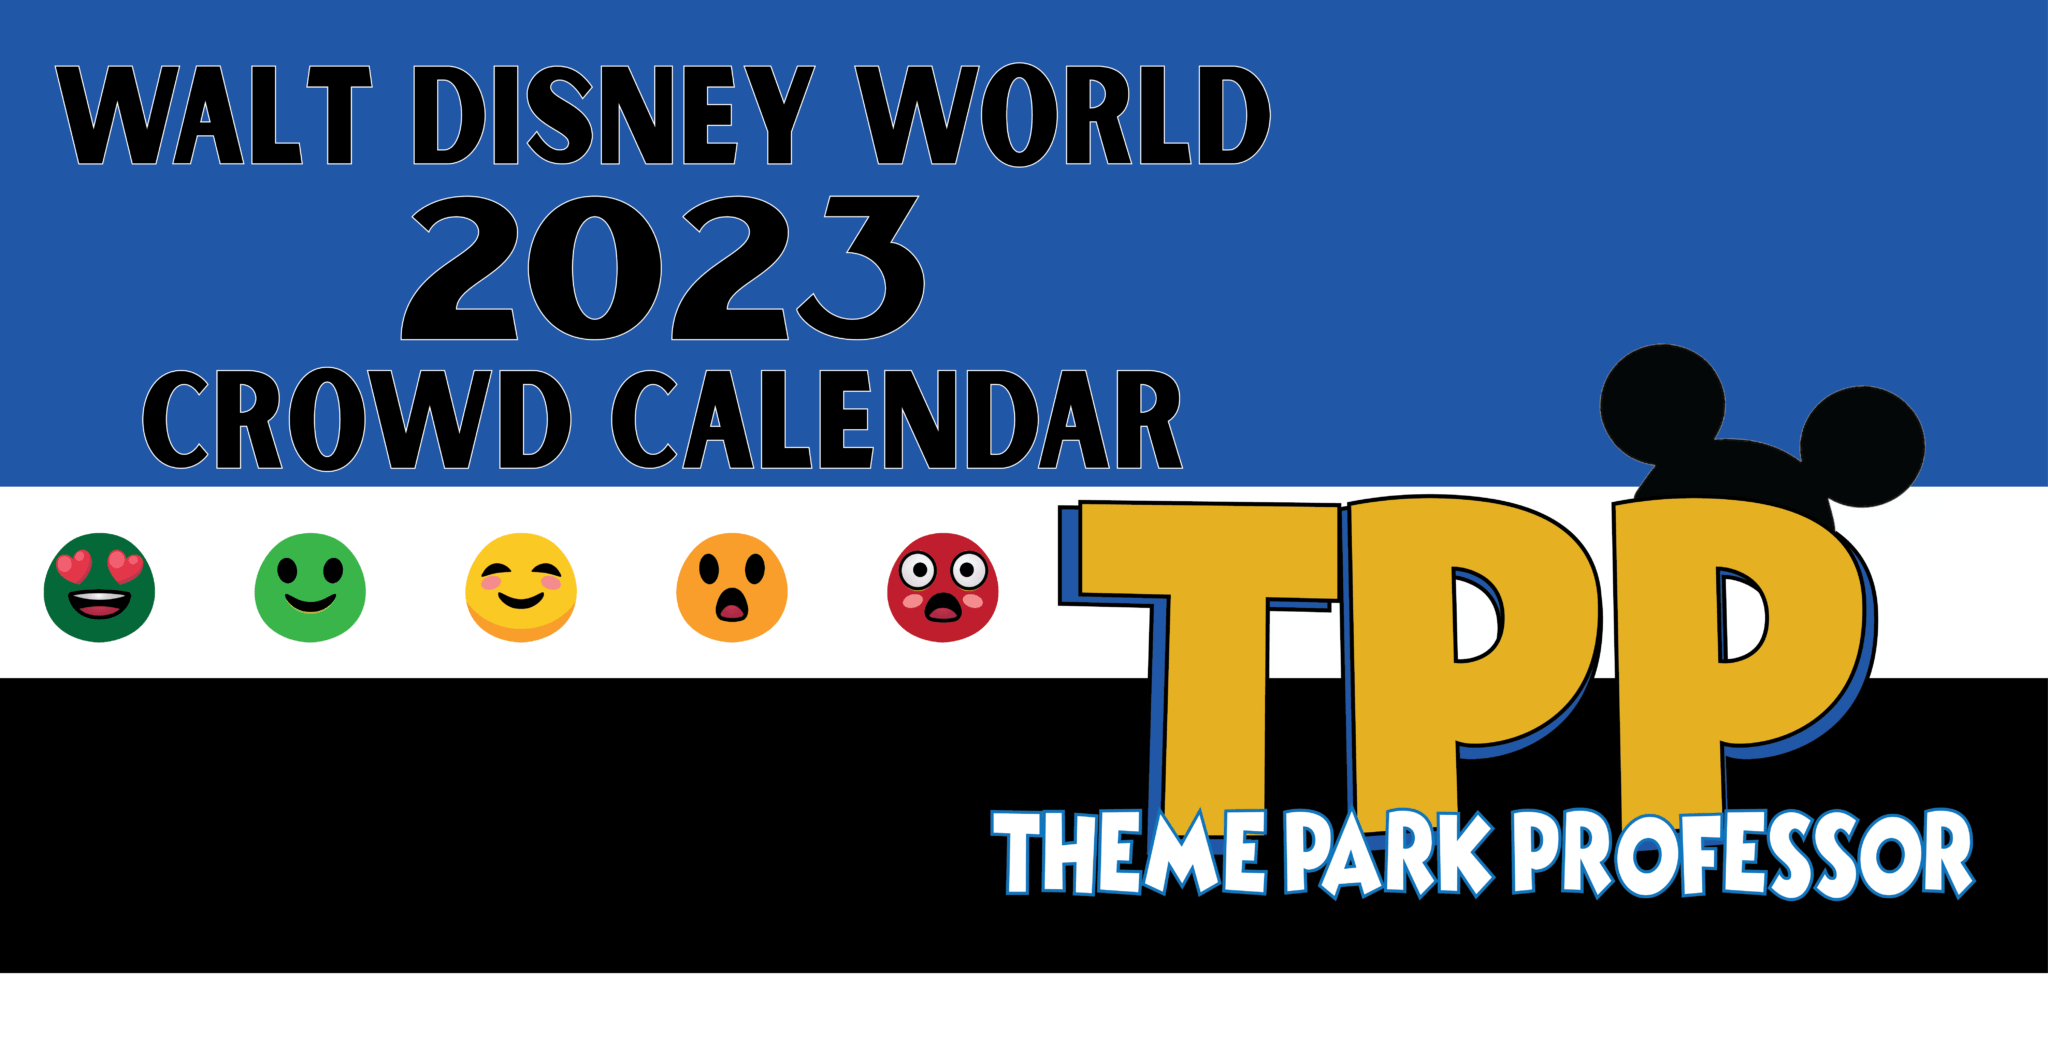 walt-disney-world-crowd-calendar-theme-park-professor